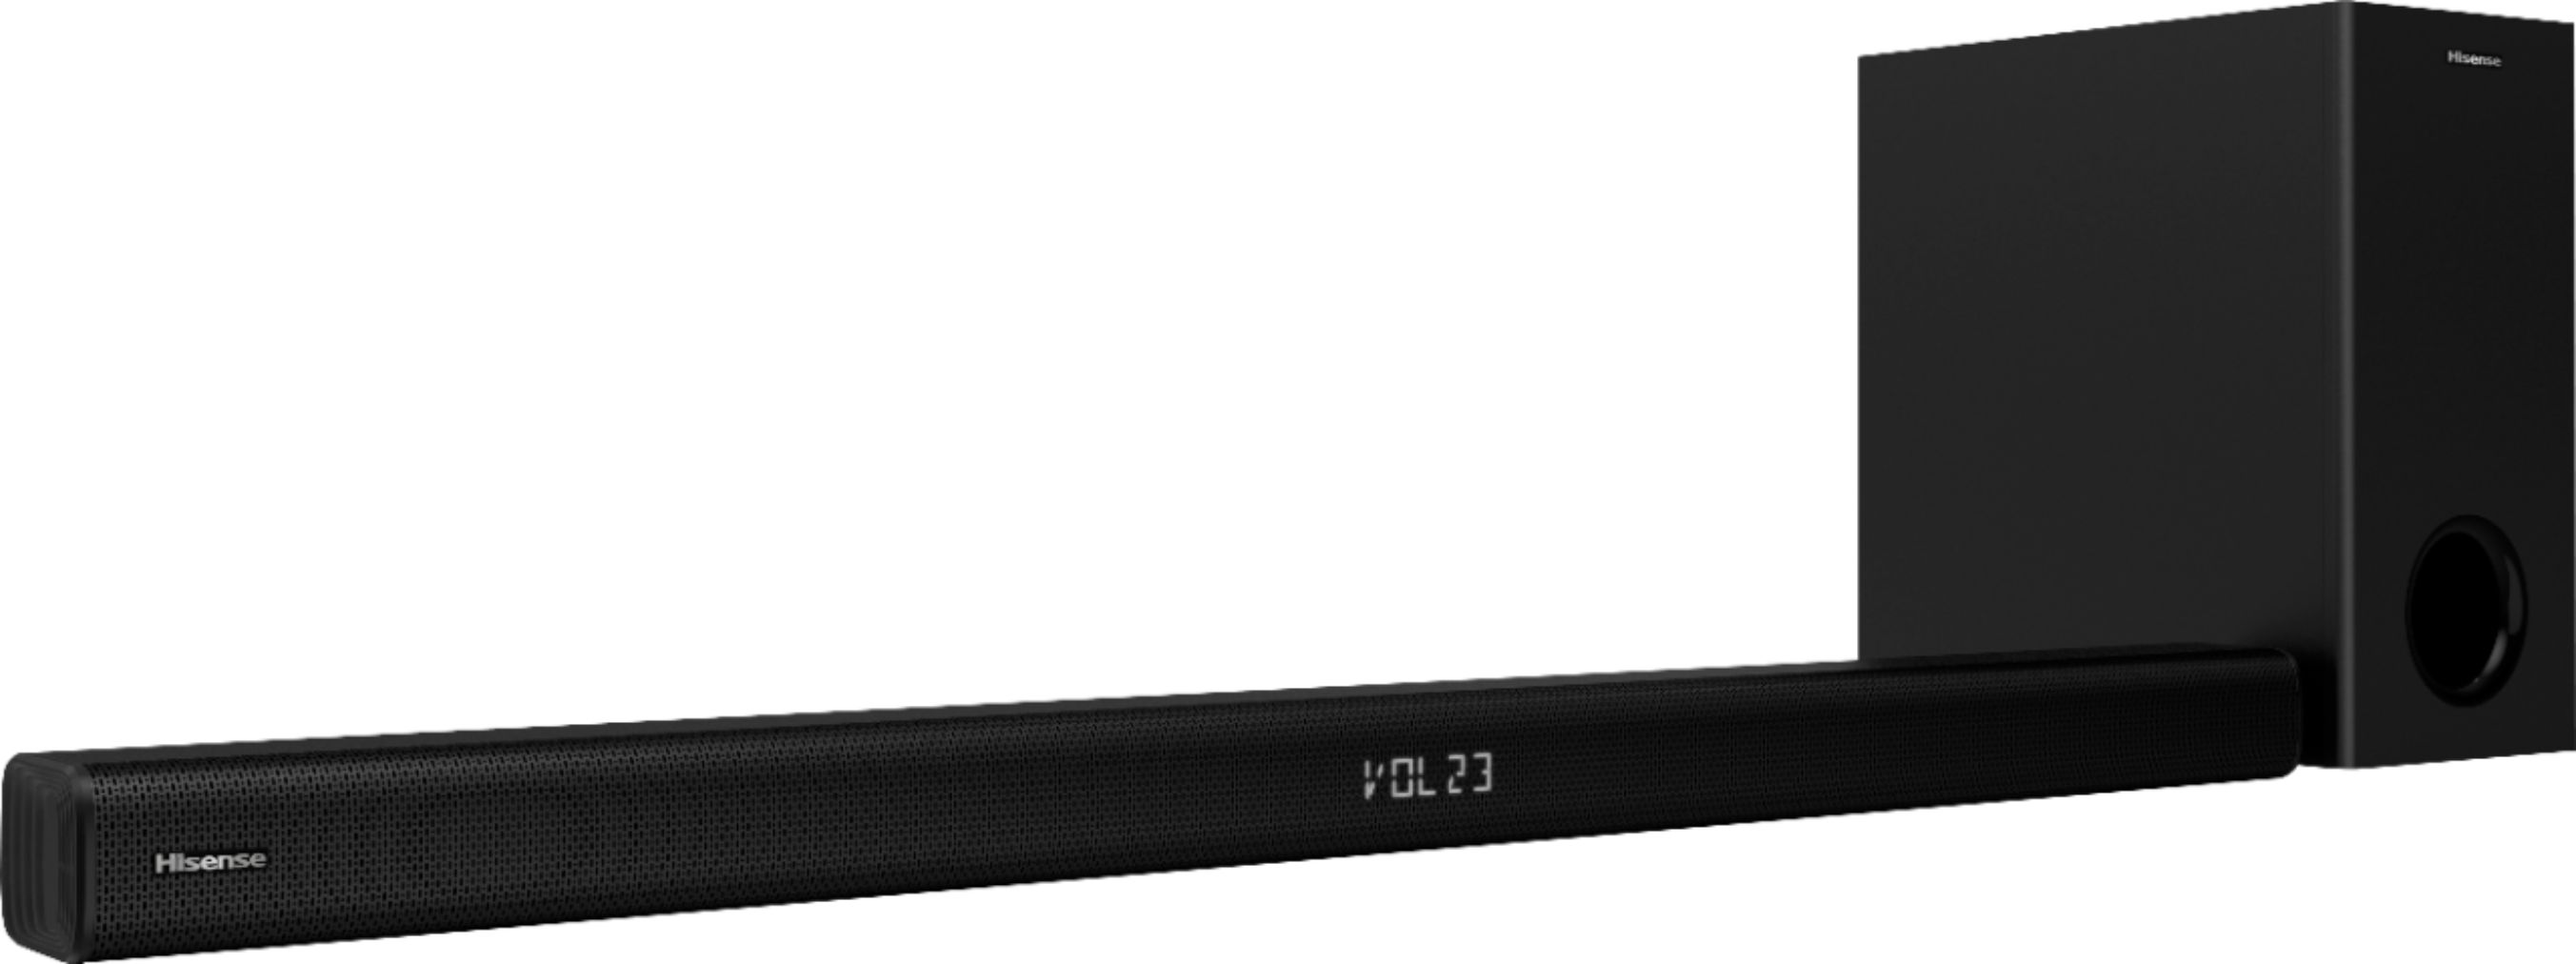 Best HS218 Soundbar Black with Wireless Subwoofer Buy: 2.1-Channel Hisense